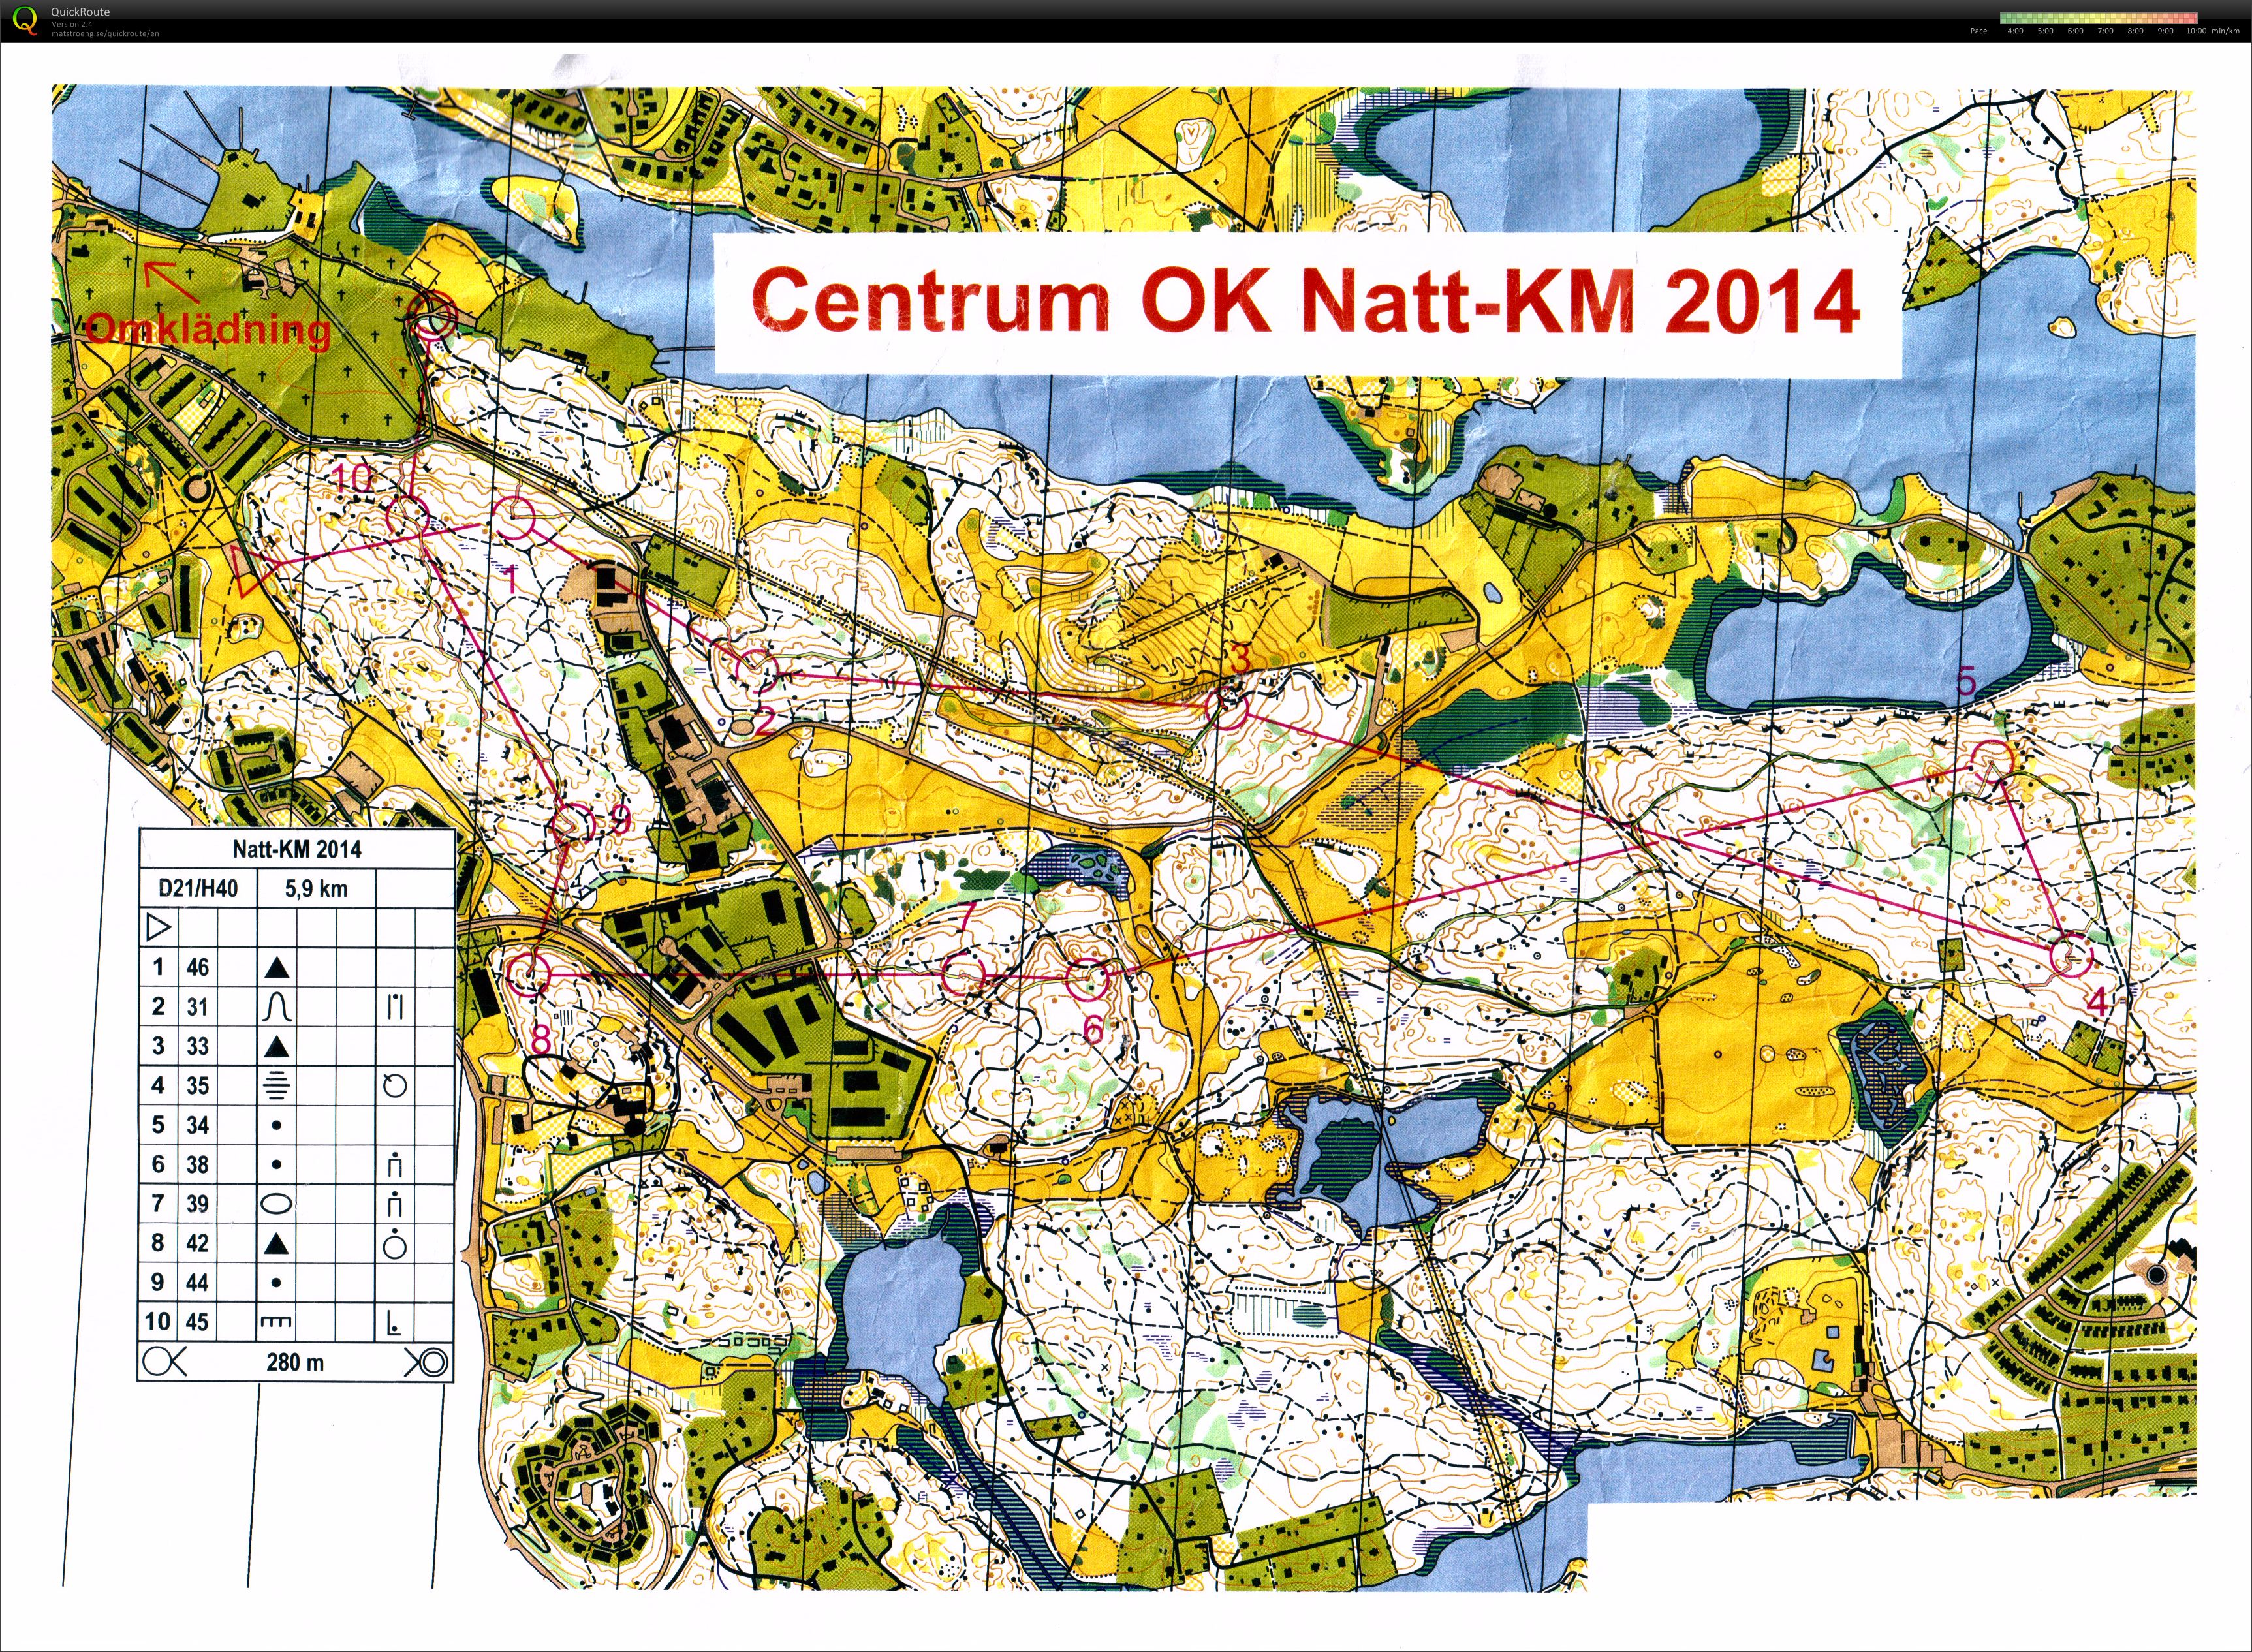 Centrum OK:s Natt-KM (06-11-2014)